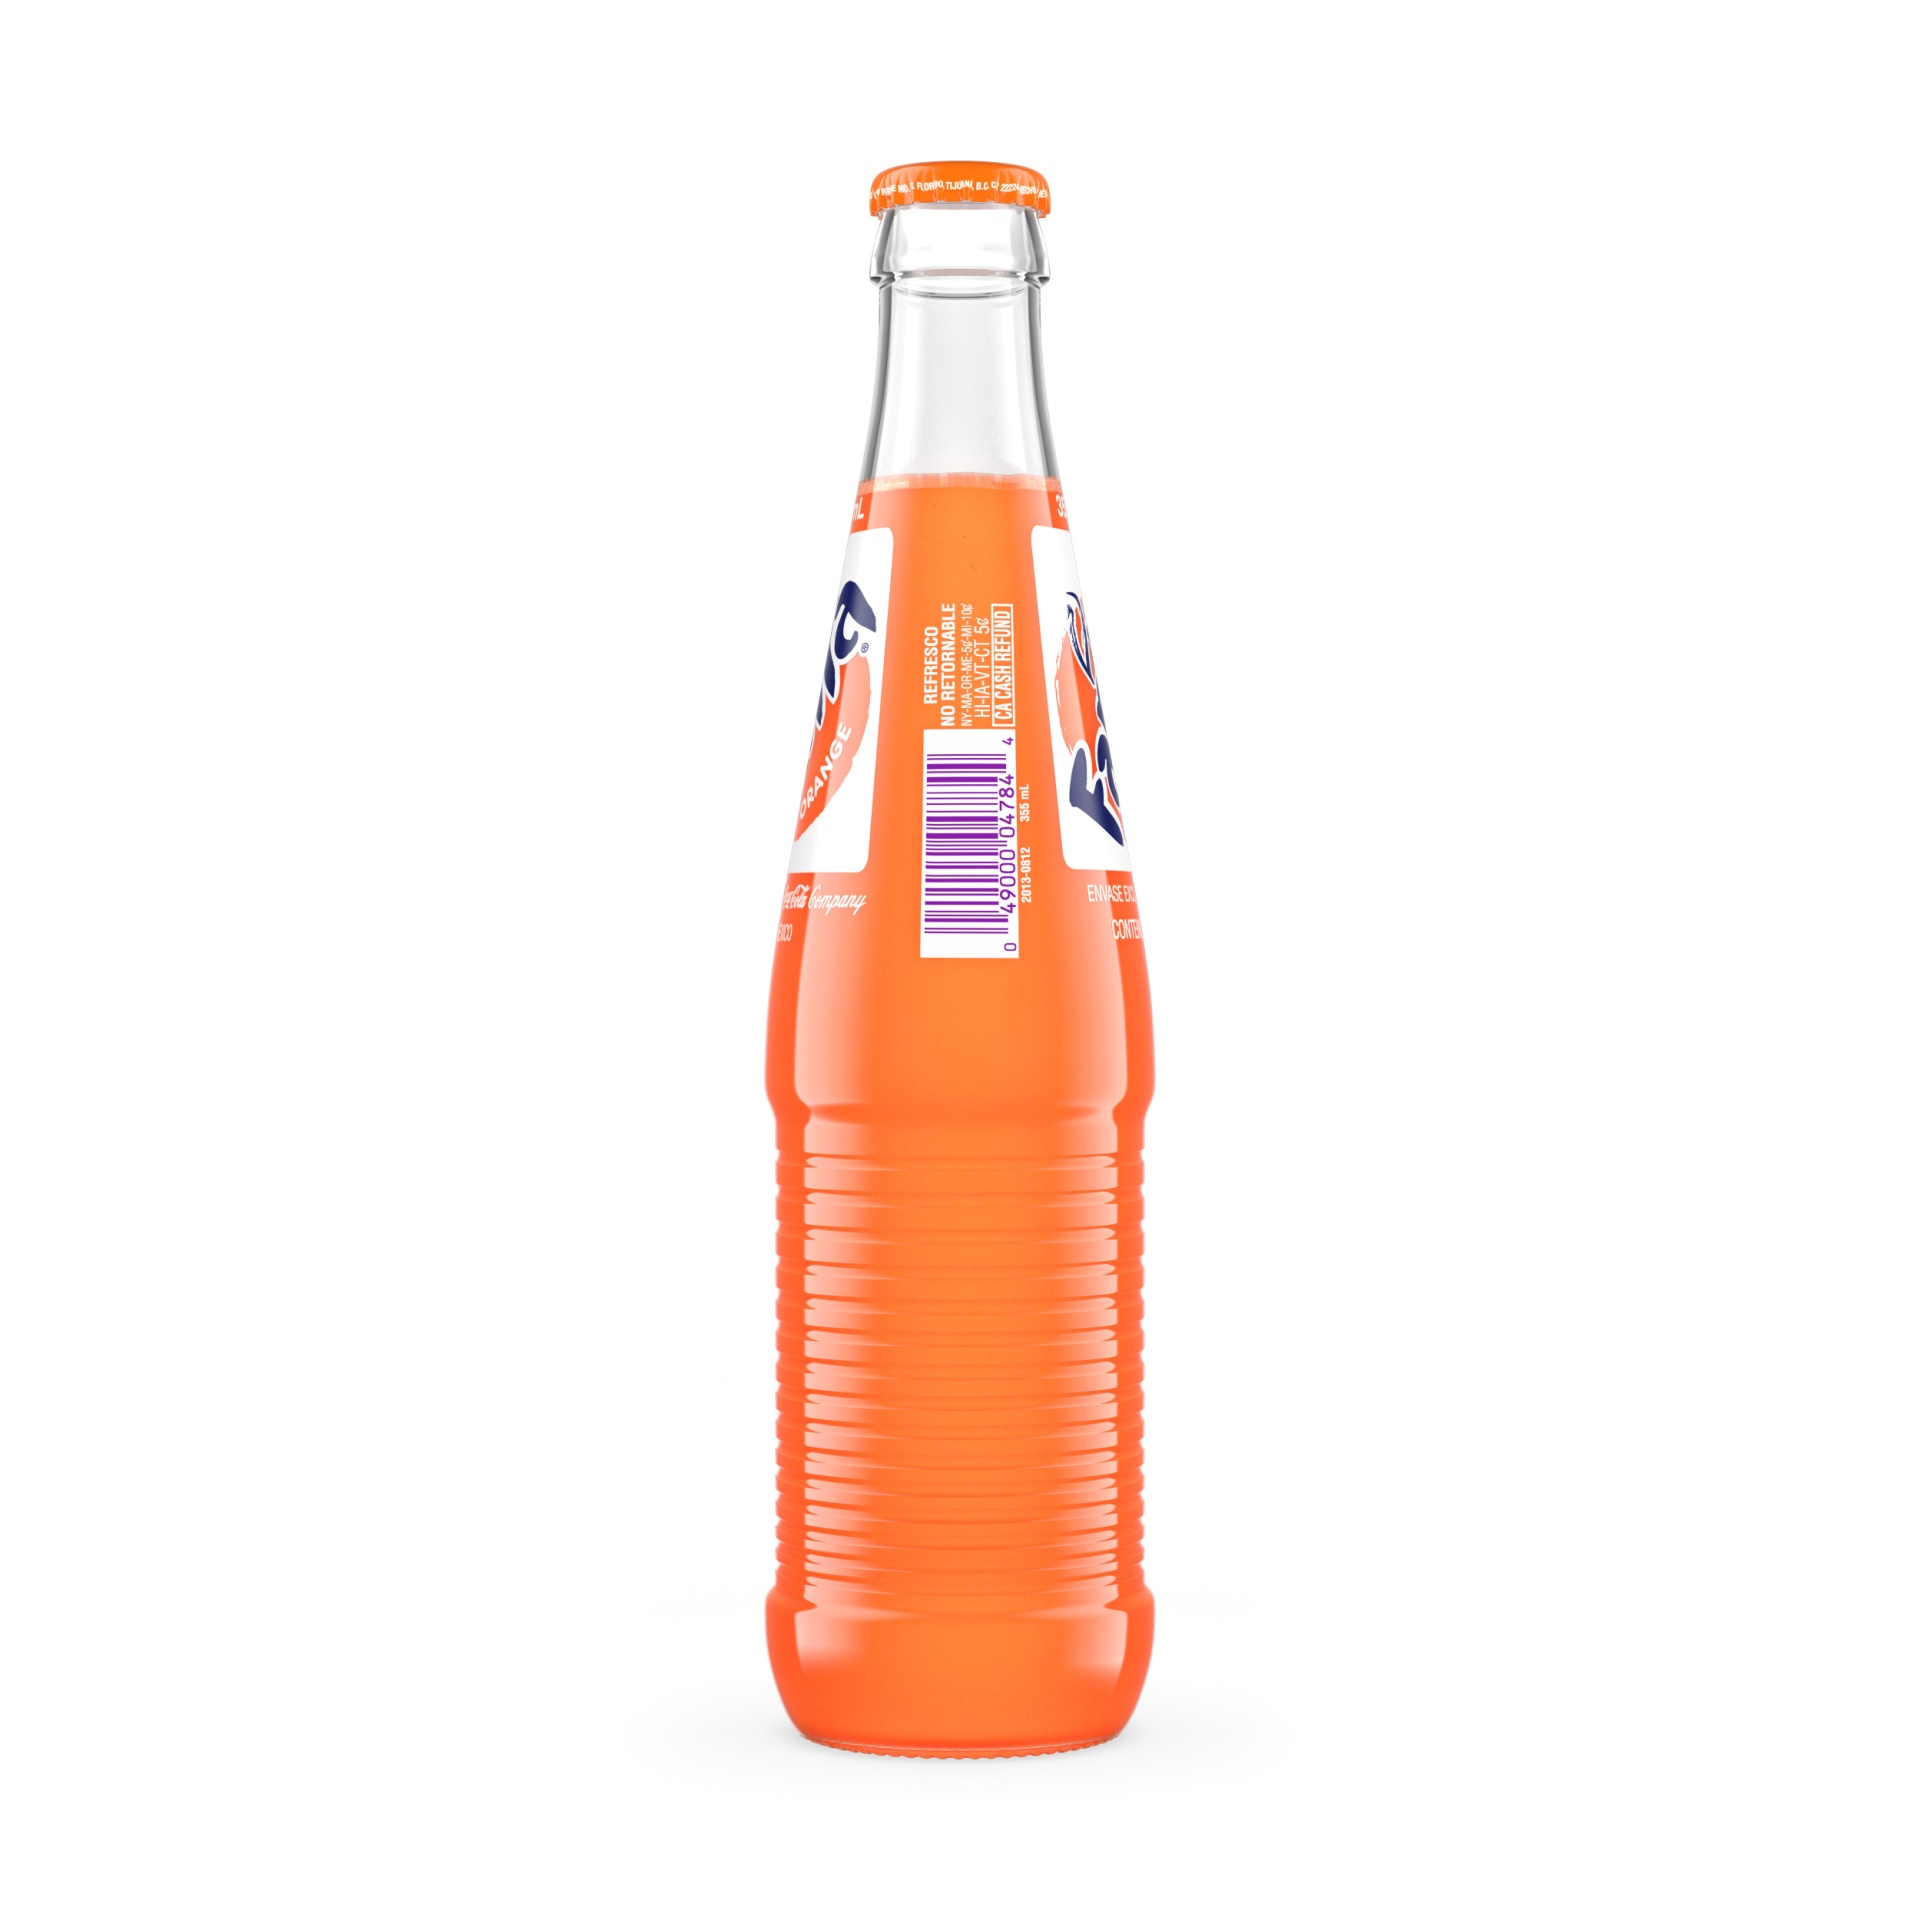 slide 4 of 4, Fanta Orange Mexico Glass Bottle, 355 mL, 11.8 fl oz